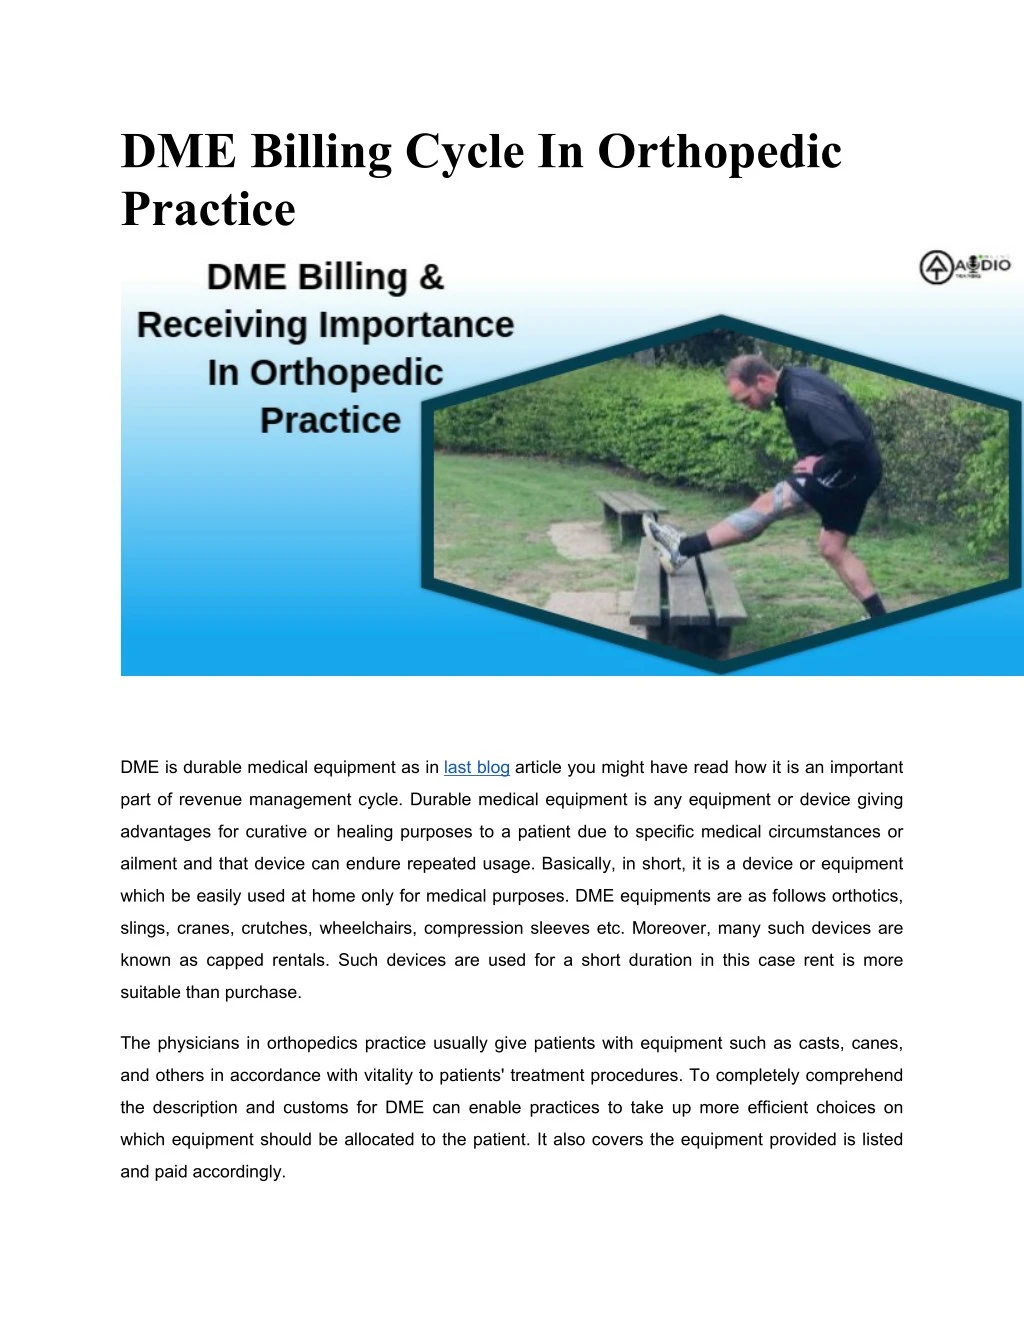 dme billing cycle in orthopedic practice